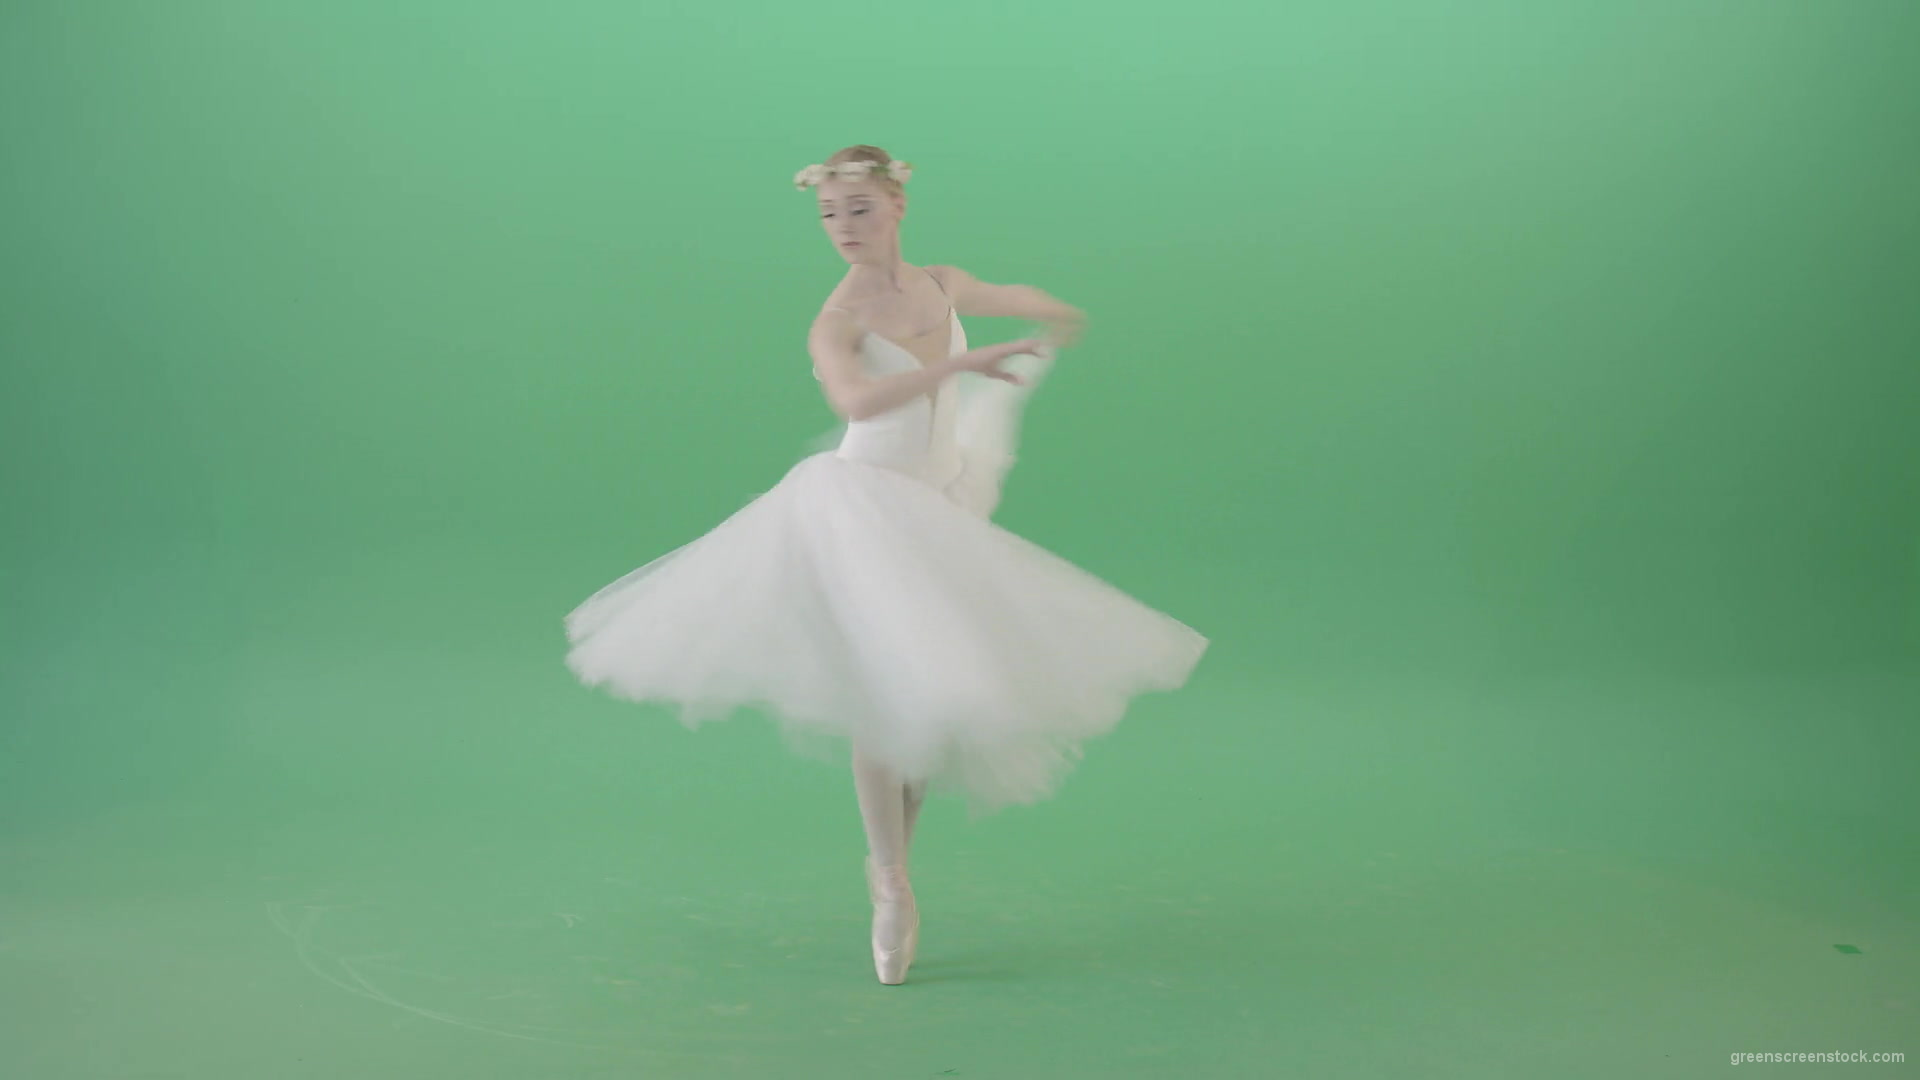 Ballerina-in-elegance-white-wedding-dress-spinning-in-dance-on-green-screen-4K-Video-Footage-1920_004 Green Screen Stock